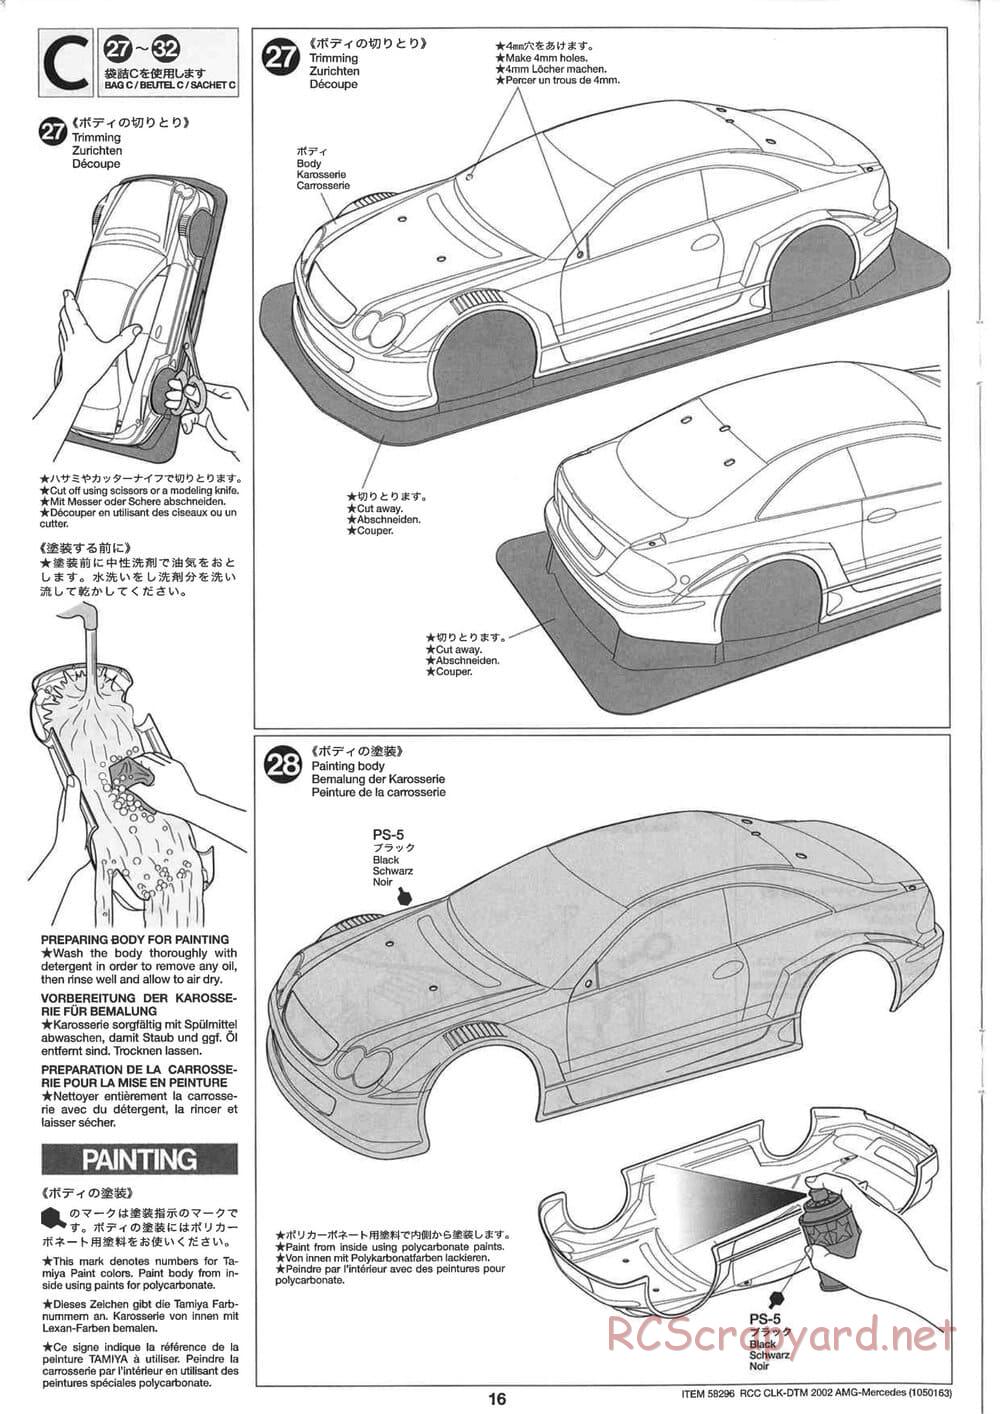 Tamiya - CLK DTM 2002 AMG Mercedes - TL-01 LA Chassis - Manual - Page 16